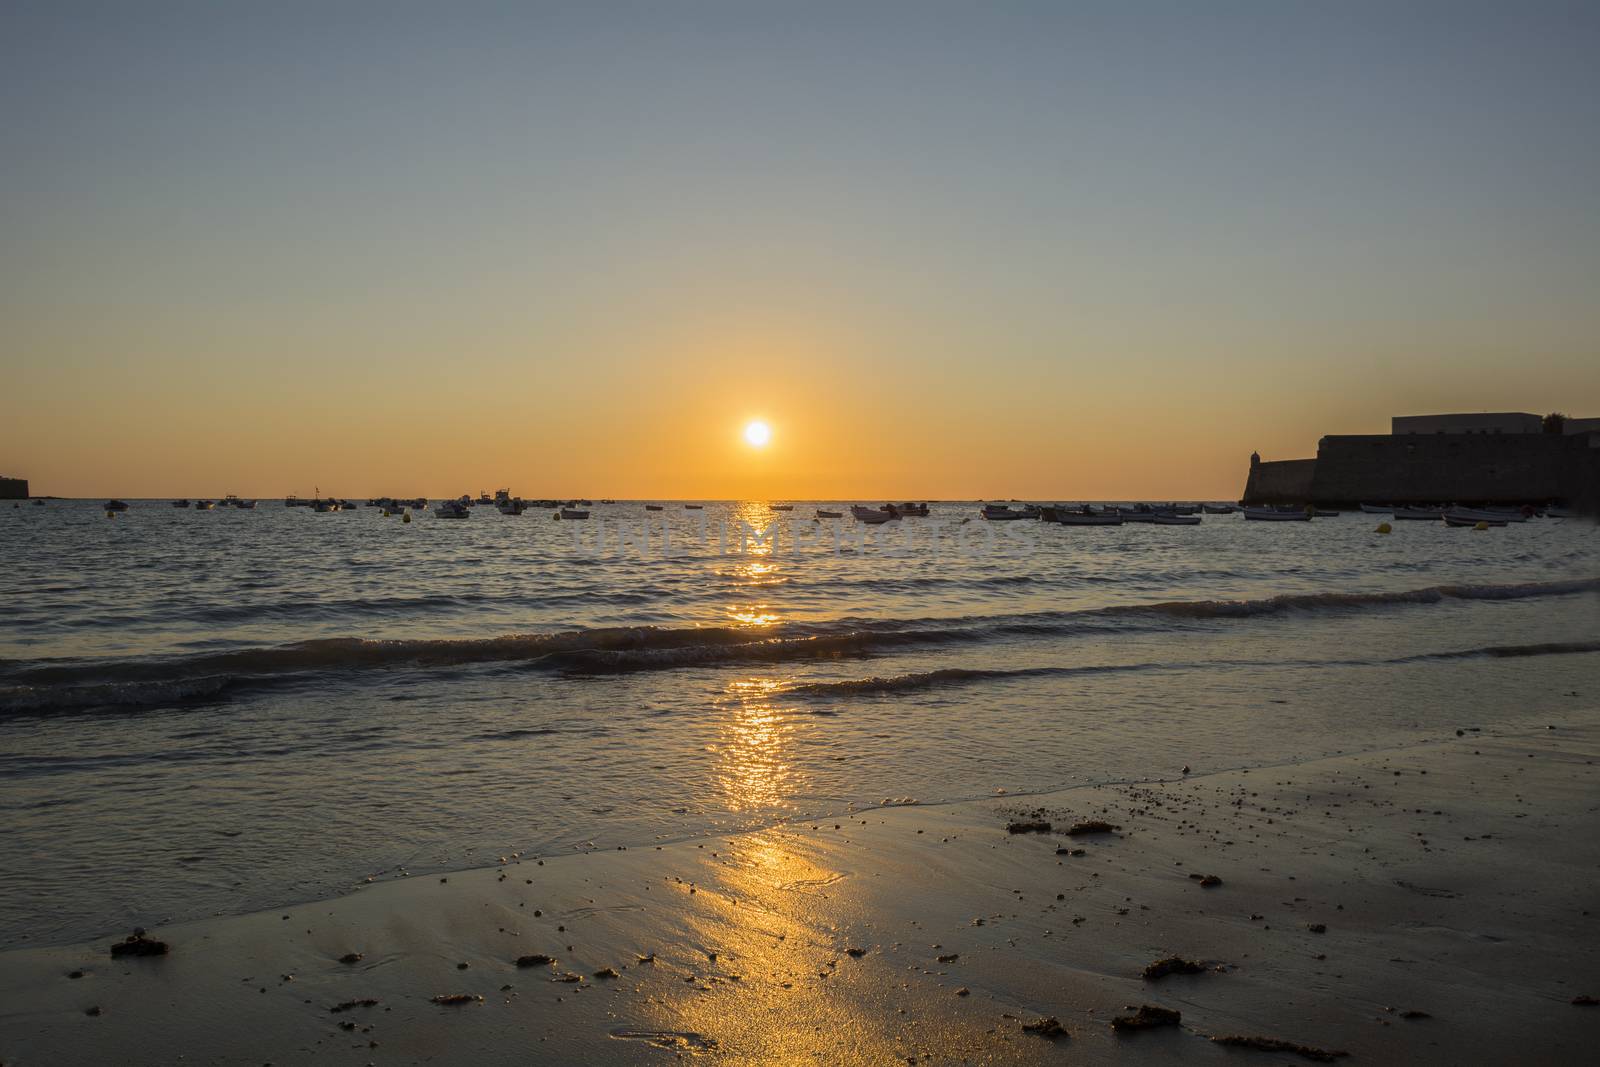 Beautiful sunset on a beach with fishing boats at the bottom, Caleta beach, Cadiz, Spain